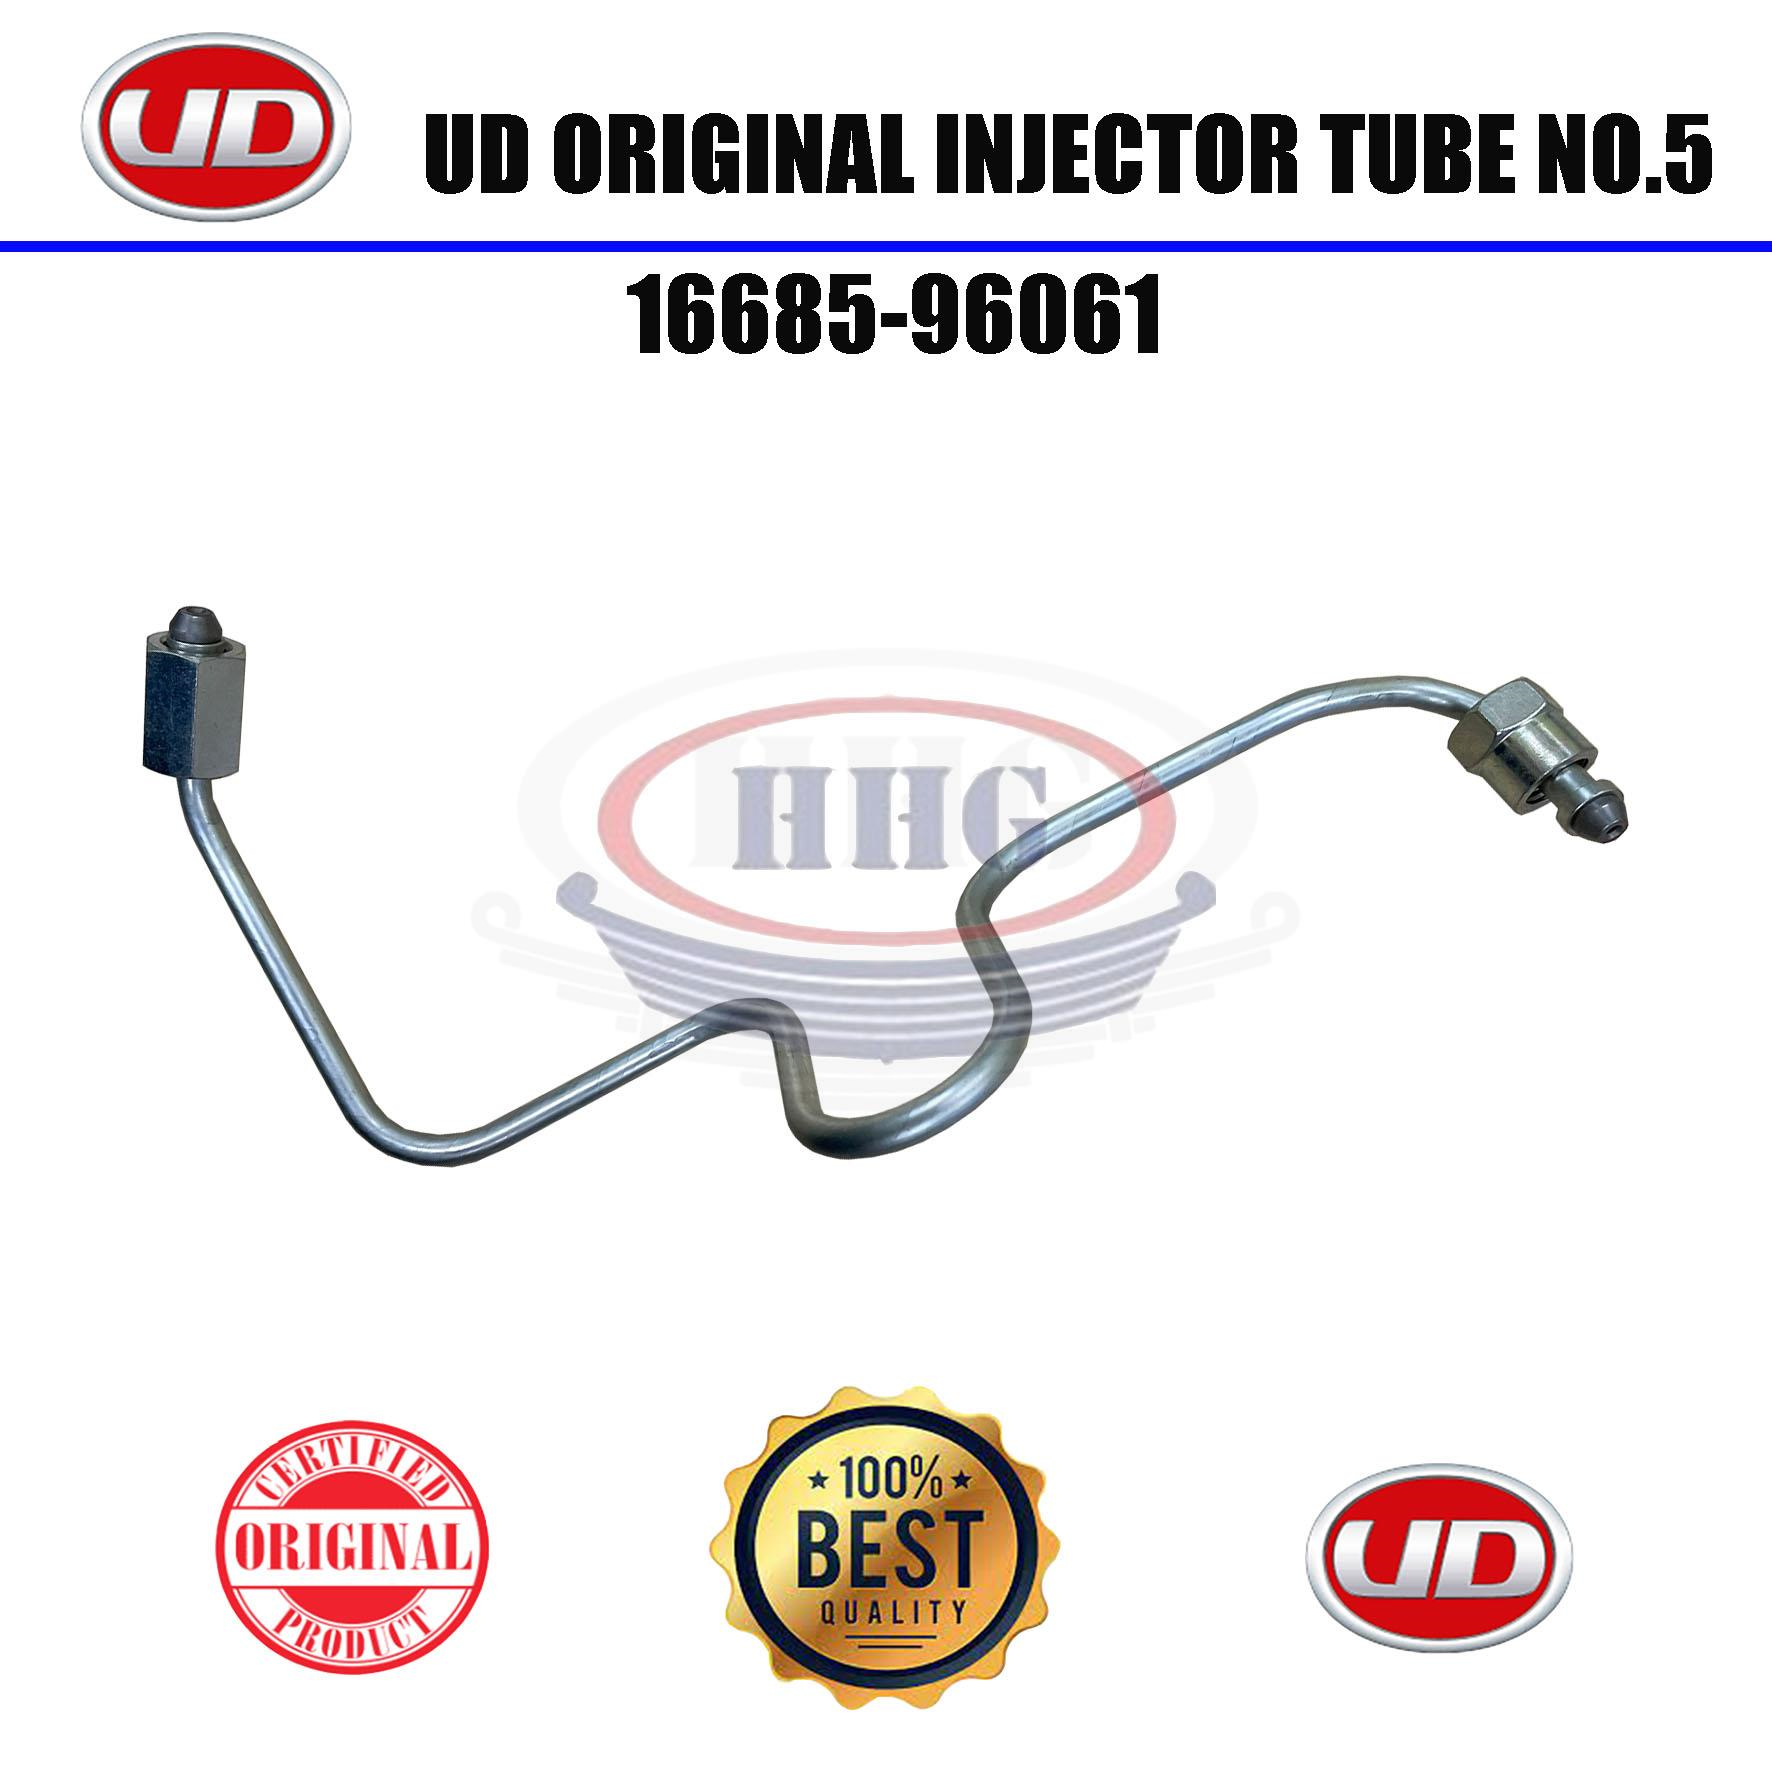 UD Original PE6T Injector Tube No.5 (16685-96061)